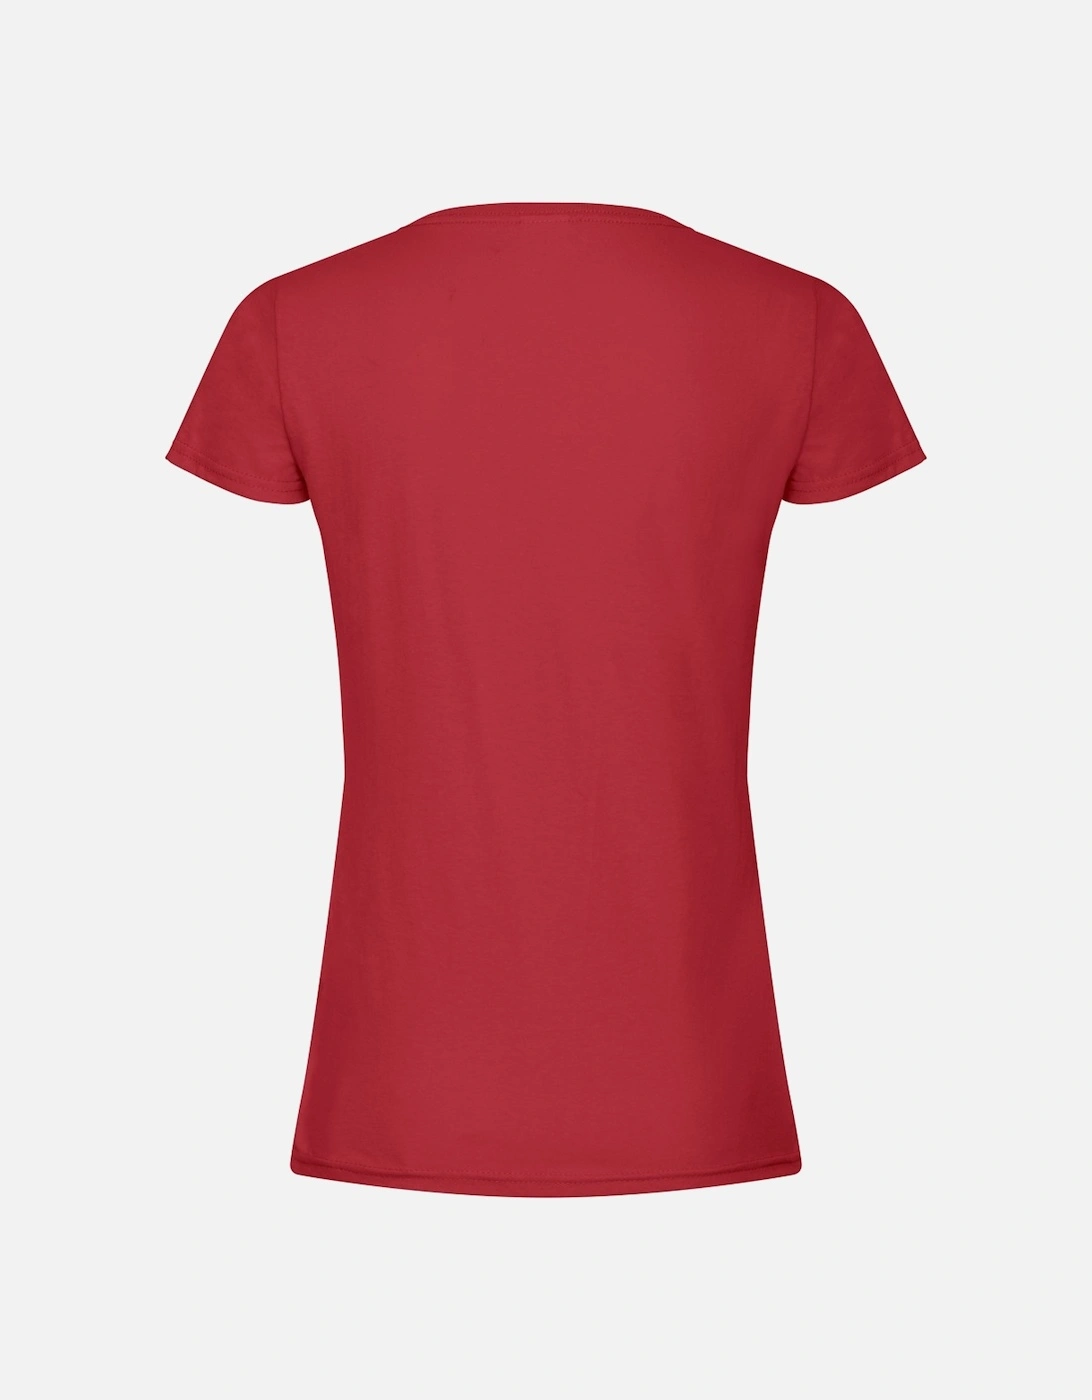 Womens/Ladies Original Lady Fit T-Shirt